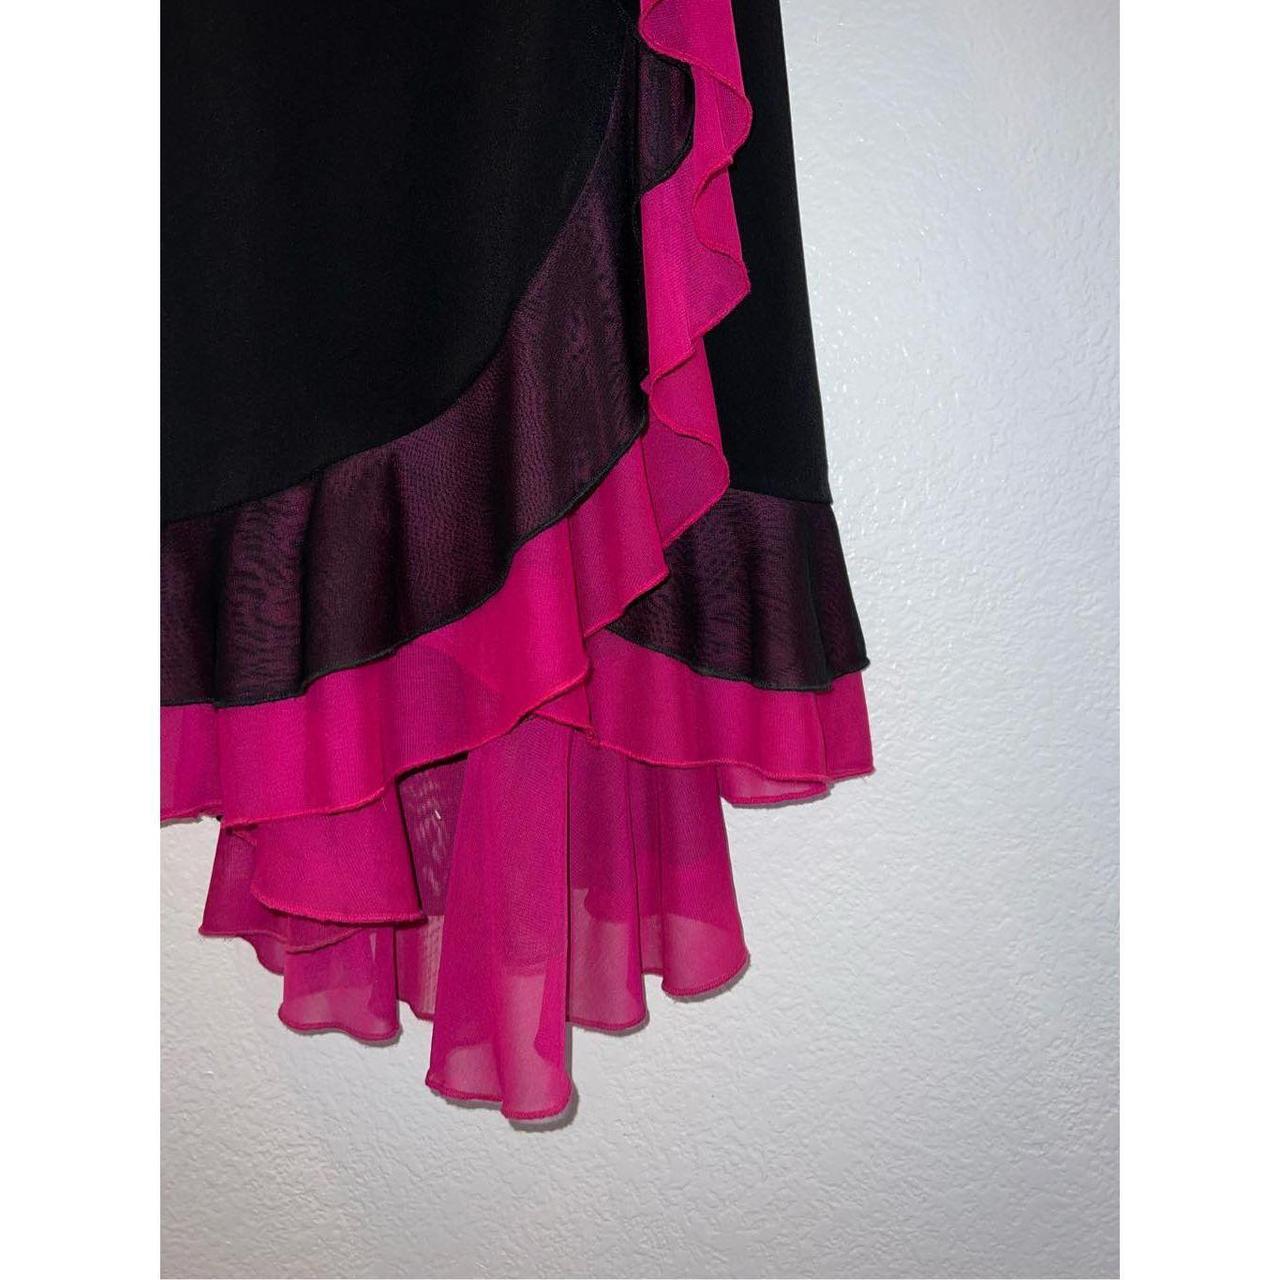 Ruby Rox Women's Black and Pink Dress (3)